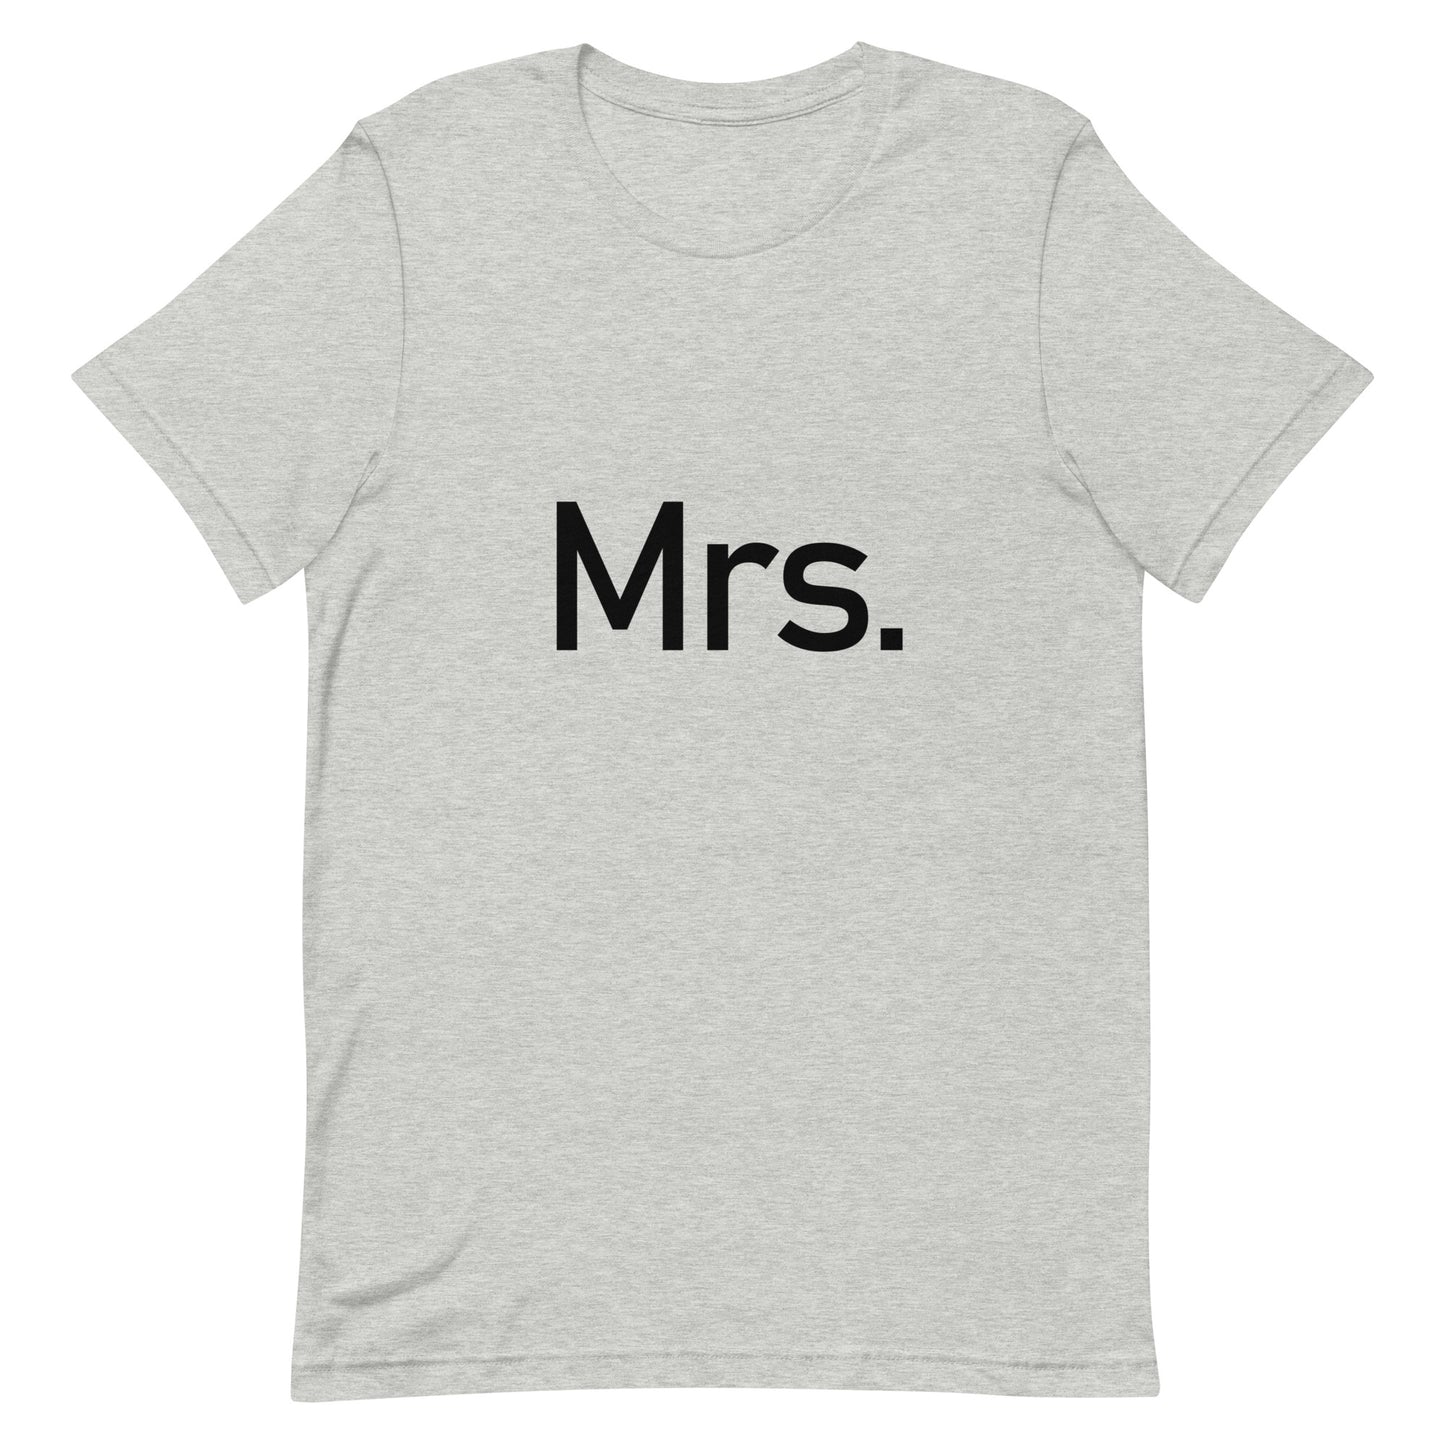 Mrs. - Sustainably Made Women’s Short Sleeve Tee